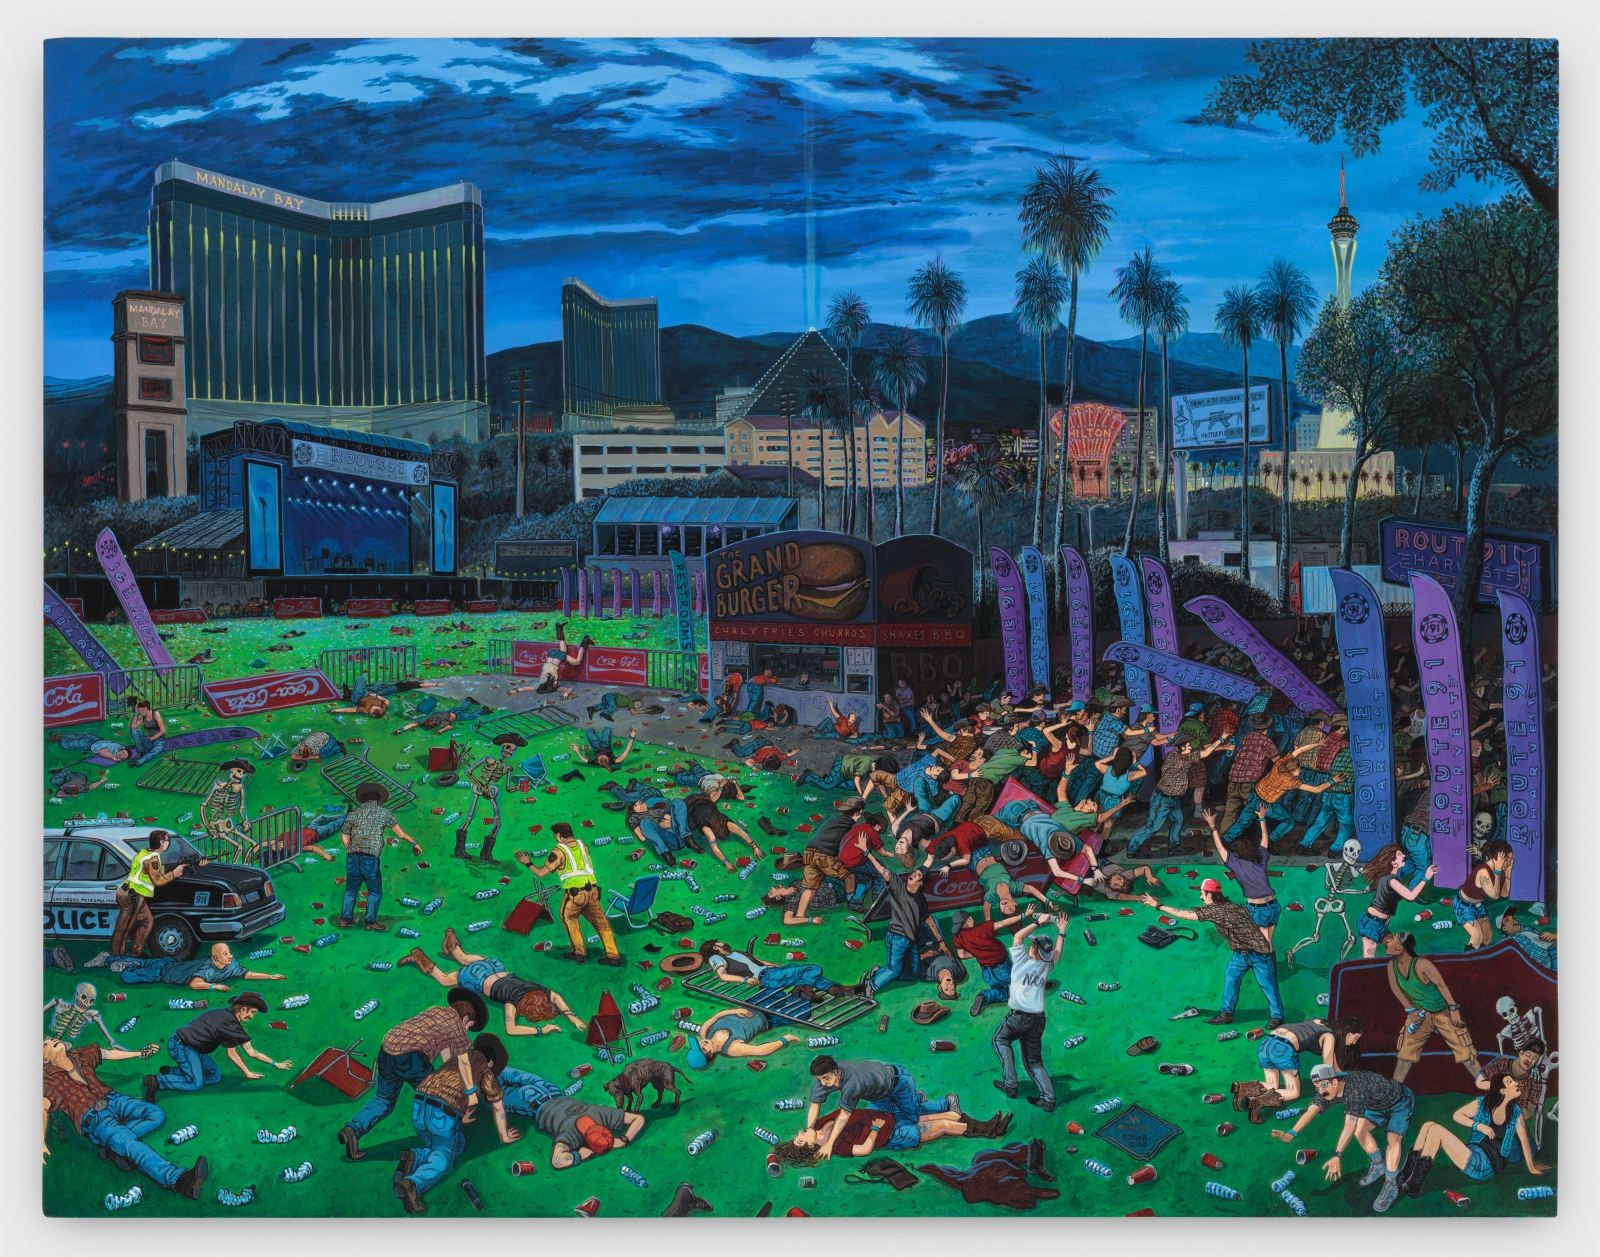 Sandow Birk
The Triumph of Death (Las Vegas), 2018
acrylic on canvas
44 x 59 ins.
111.8 x 149.9 cm